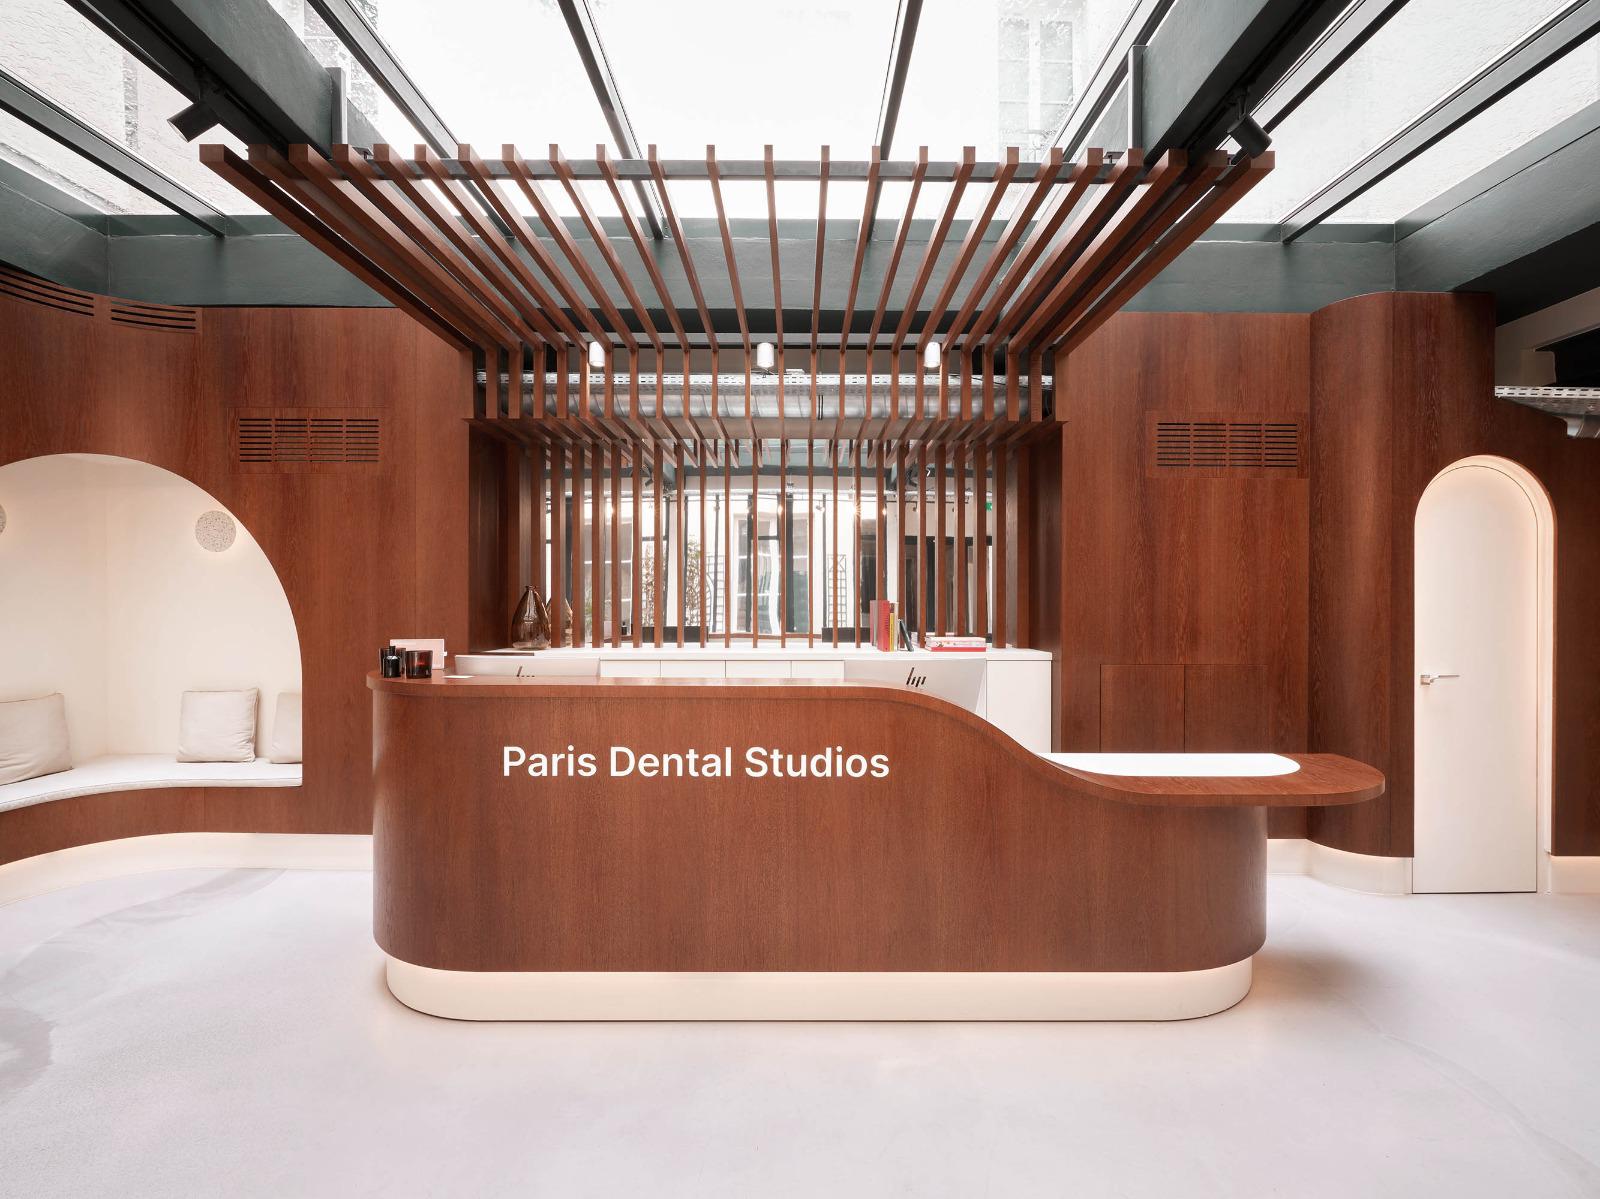 Paris Dental Studios